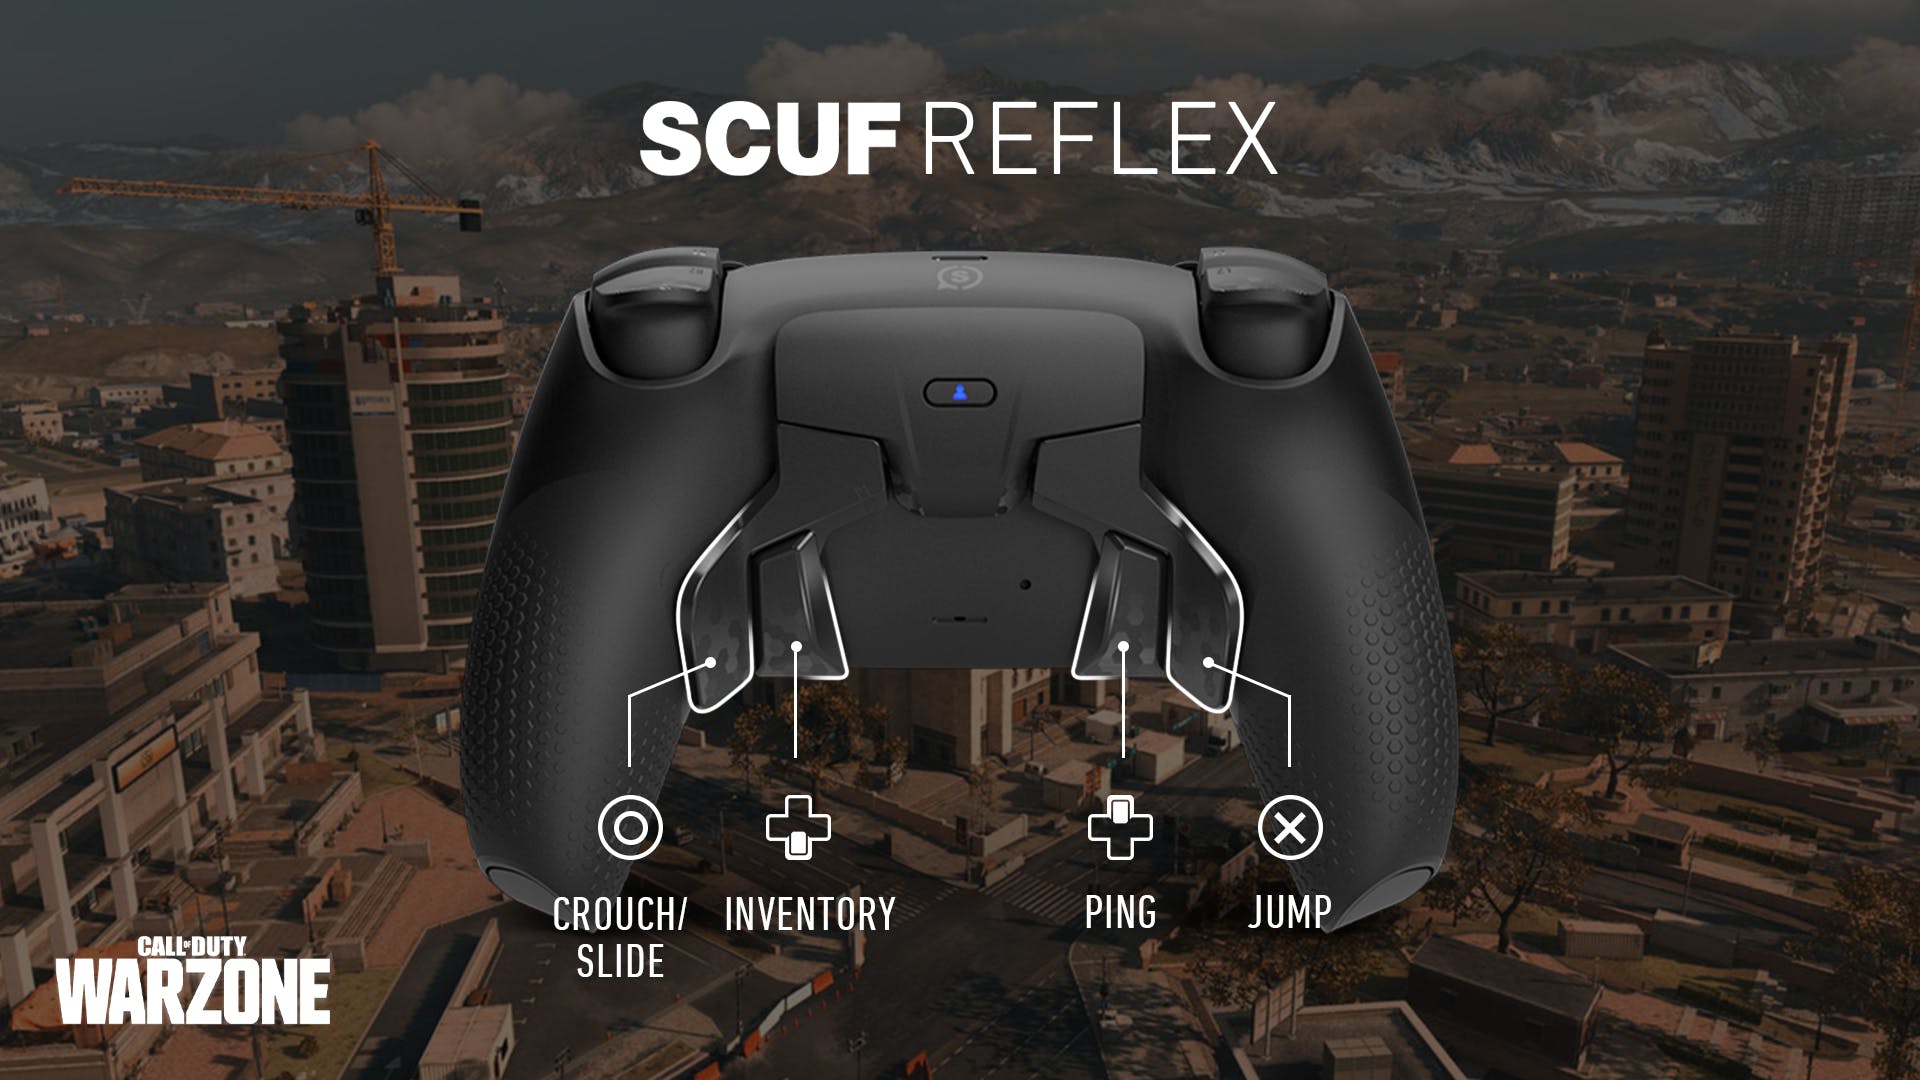 SCUF Reflex COD Warzone PS4 Controller Setup